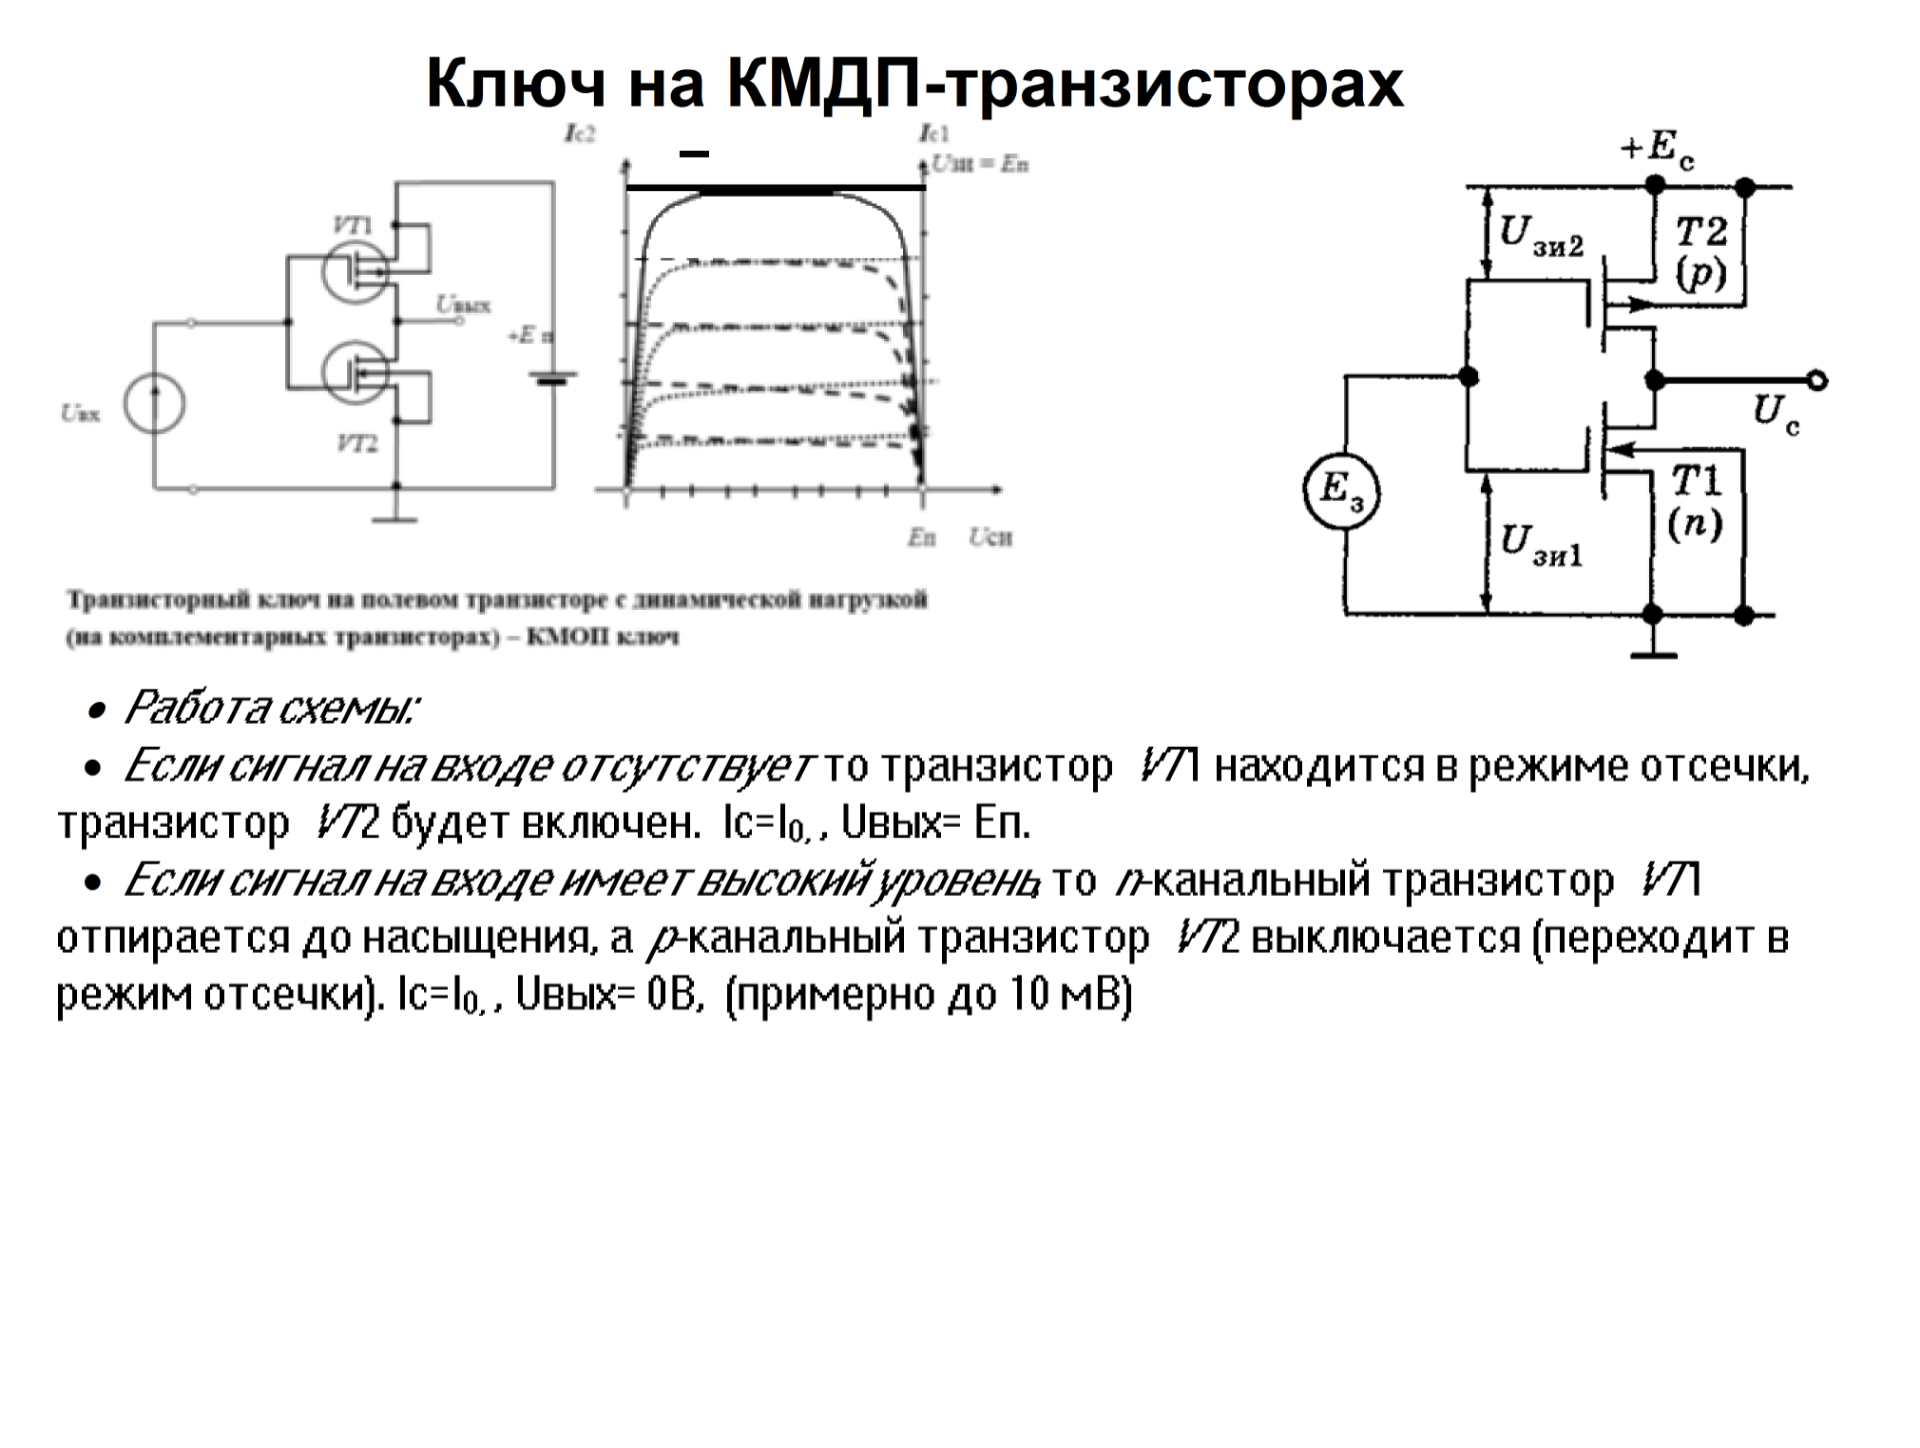 Ключ на комплементарных КМДП-транзисторах.png